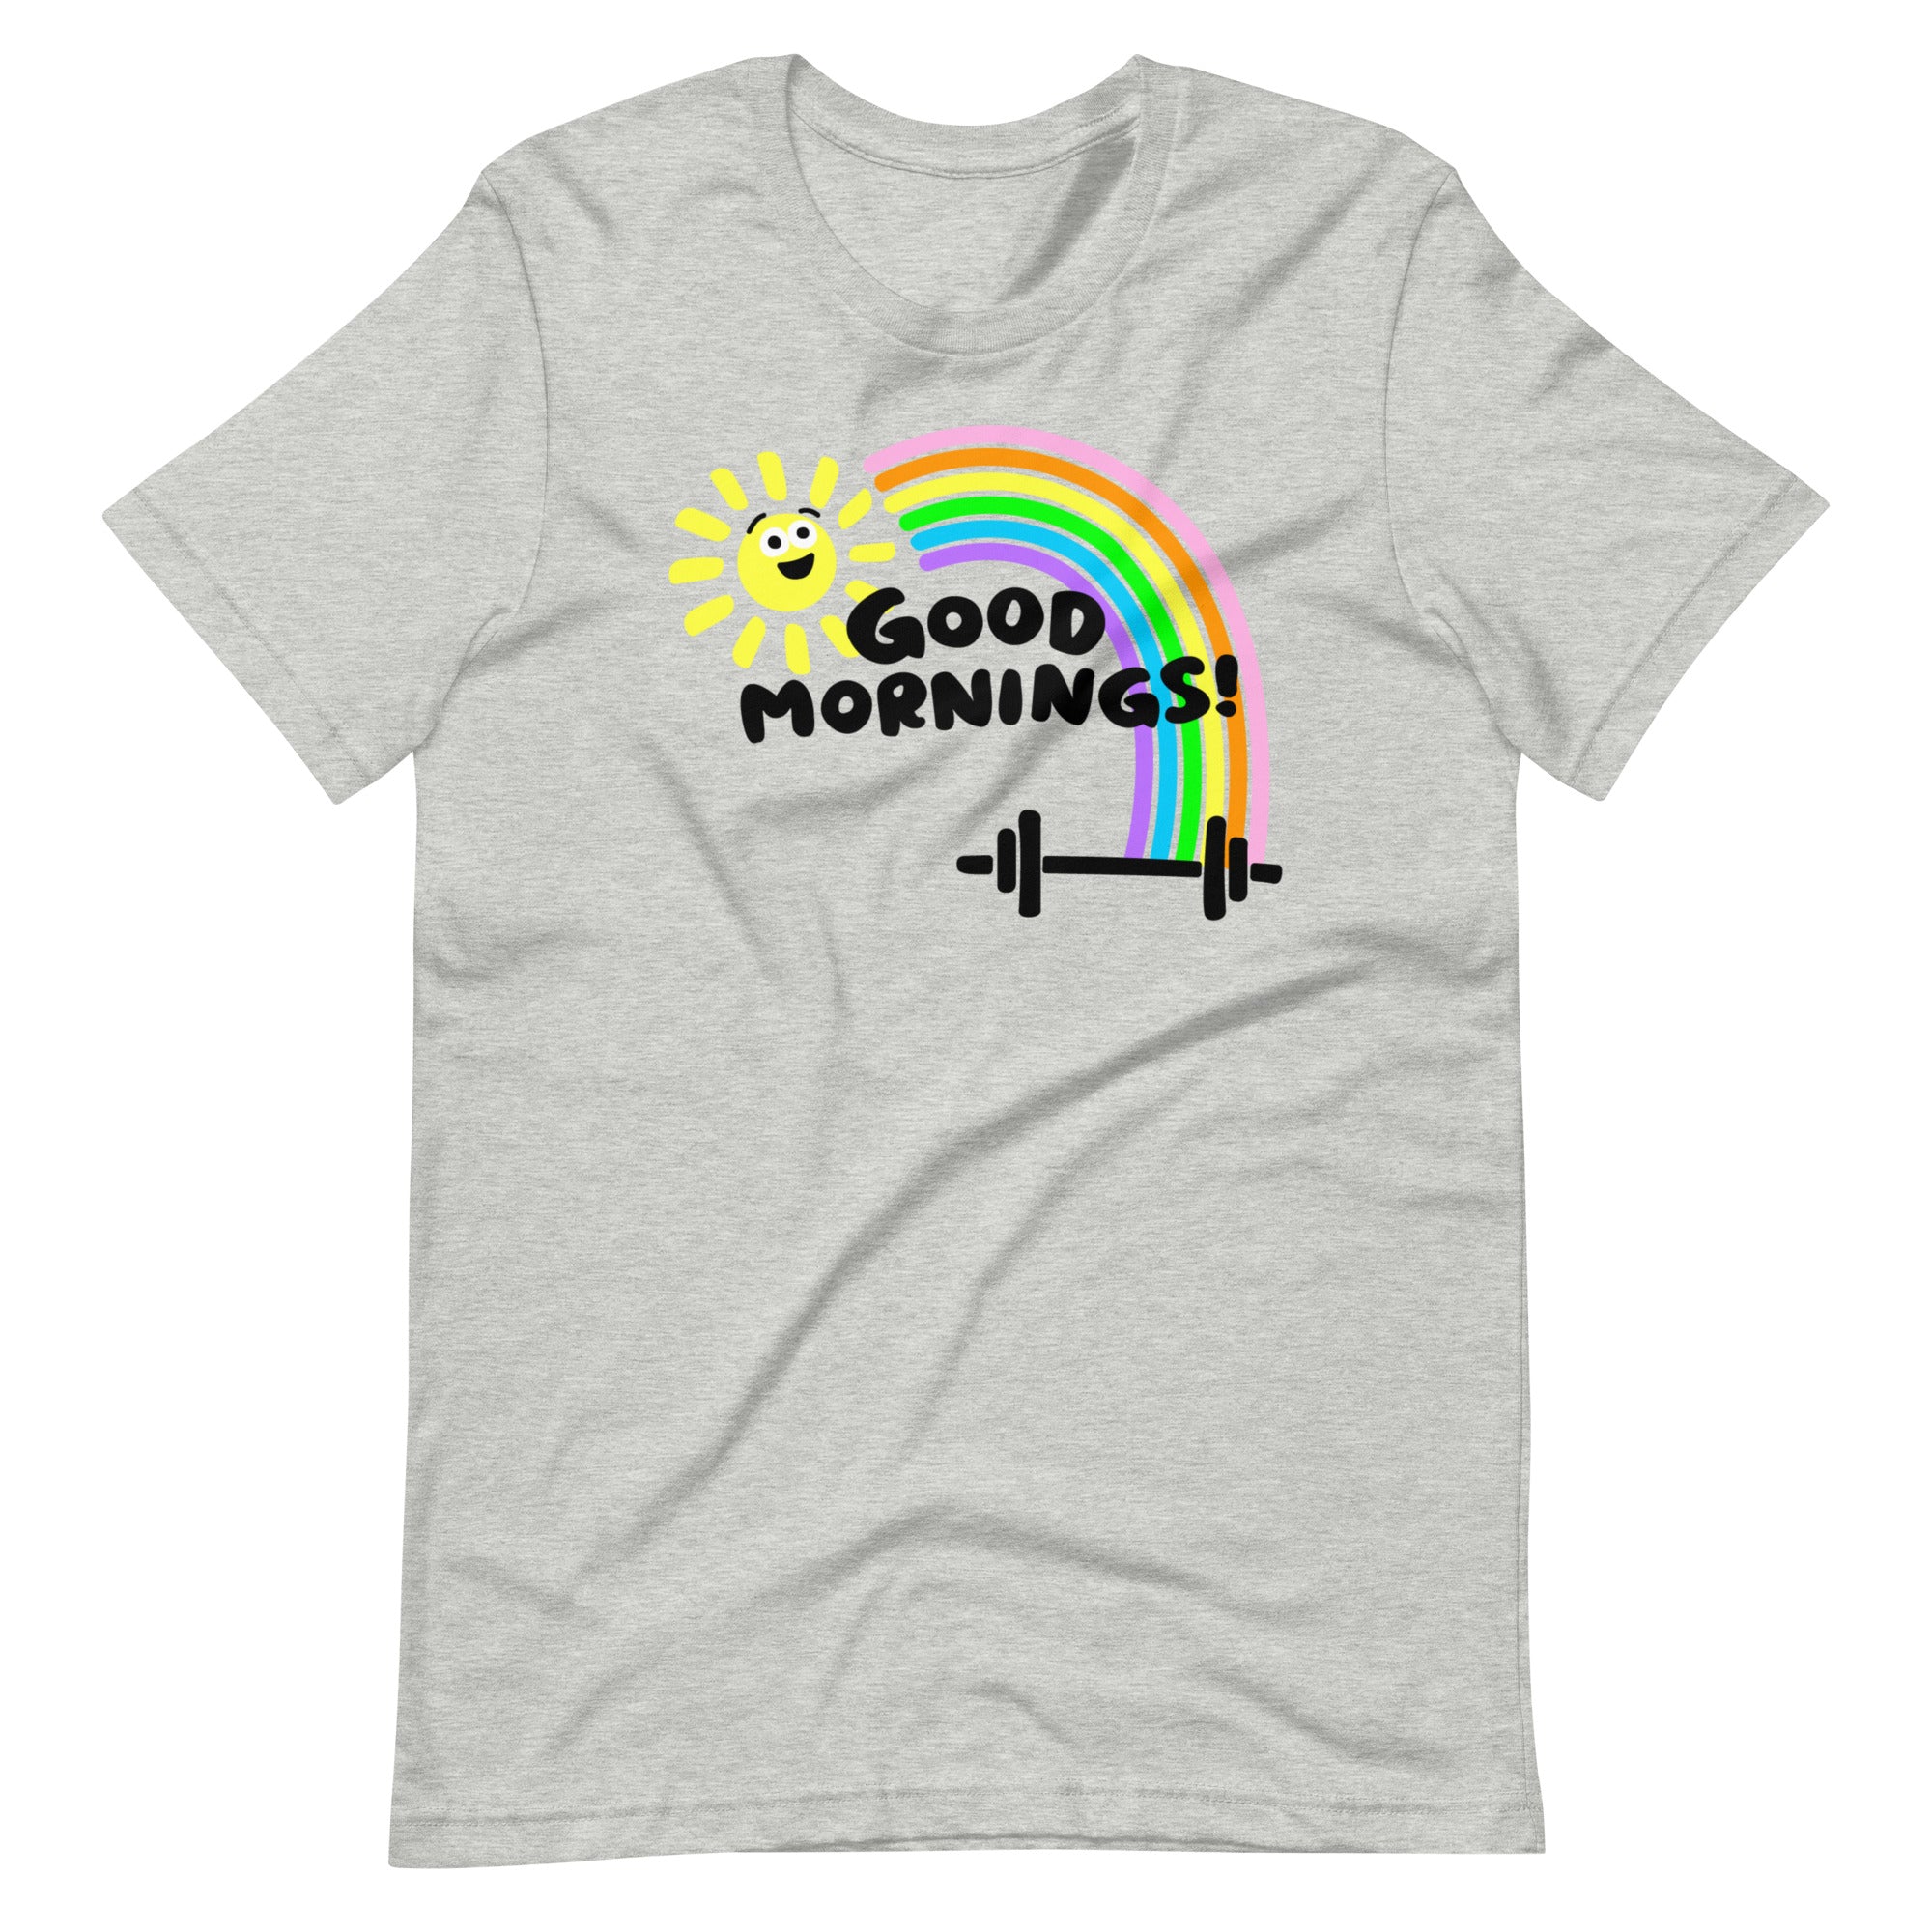 Cute weightlifting shirt for gym shirt with rainbow, cute workout tshirt, fun fitness shirt, Kalirally